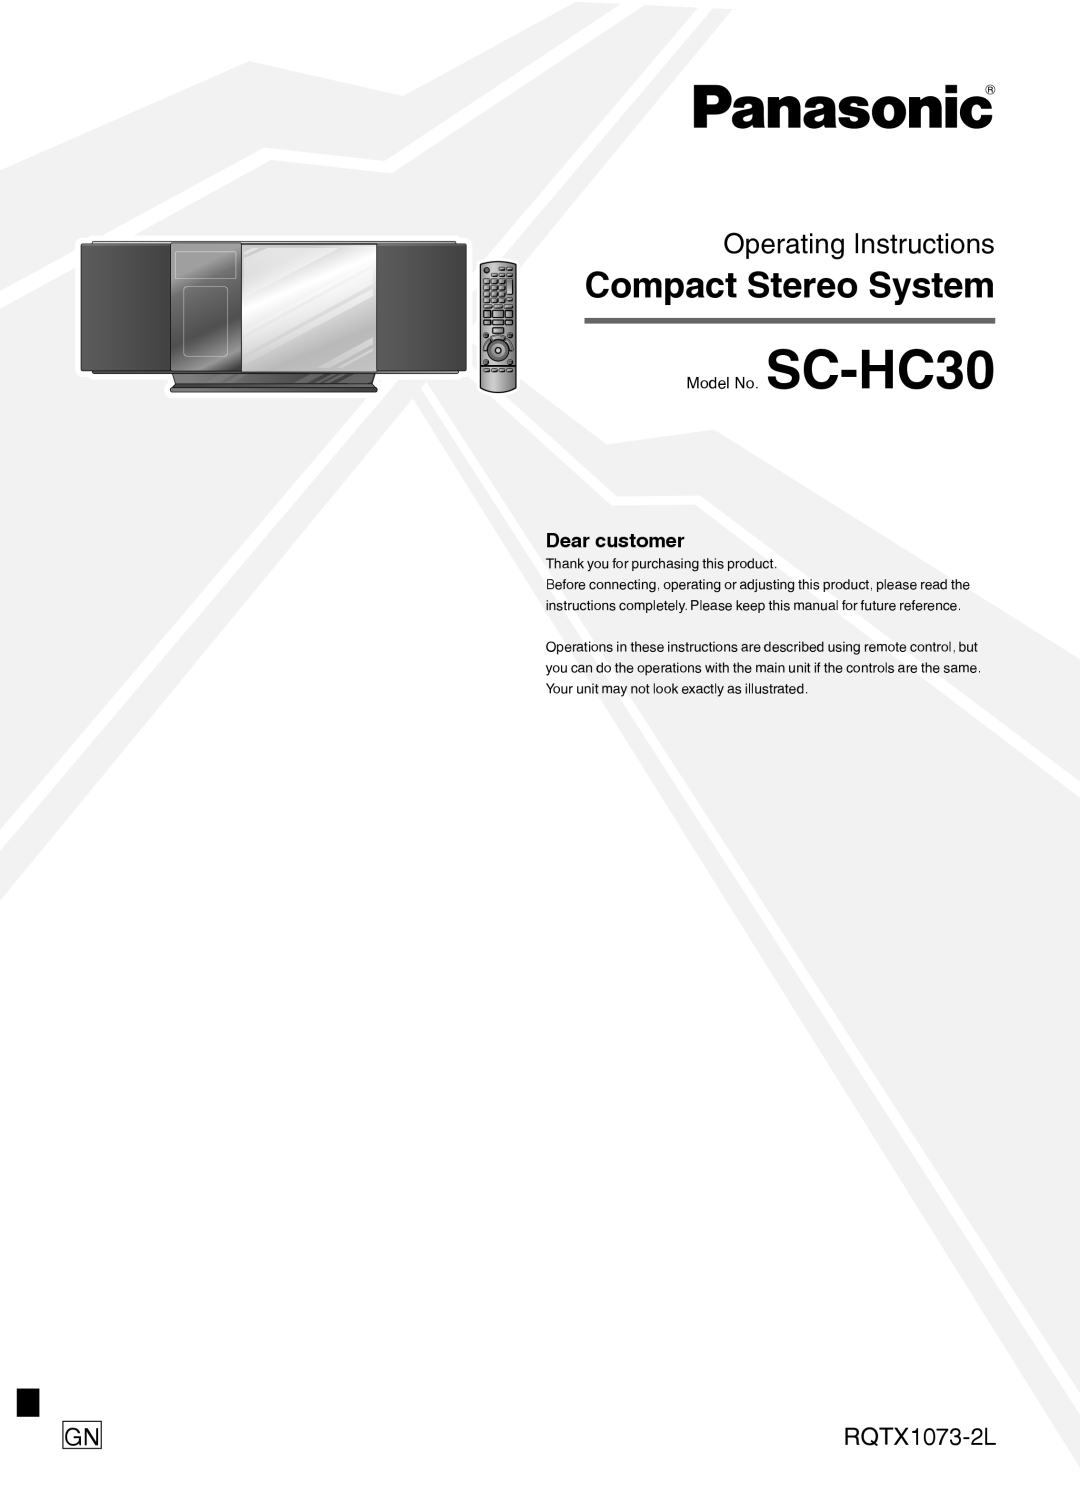 Panasonic manual Operating Instructions, RQTX1073-2L, Model No. SC-HC30, Compact Stereo System 